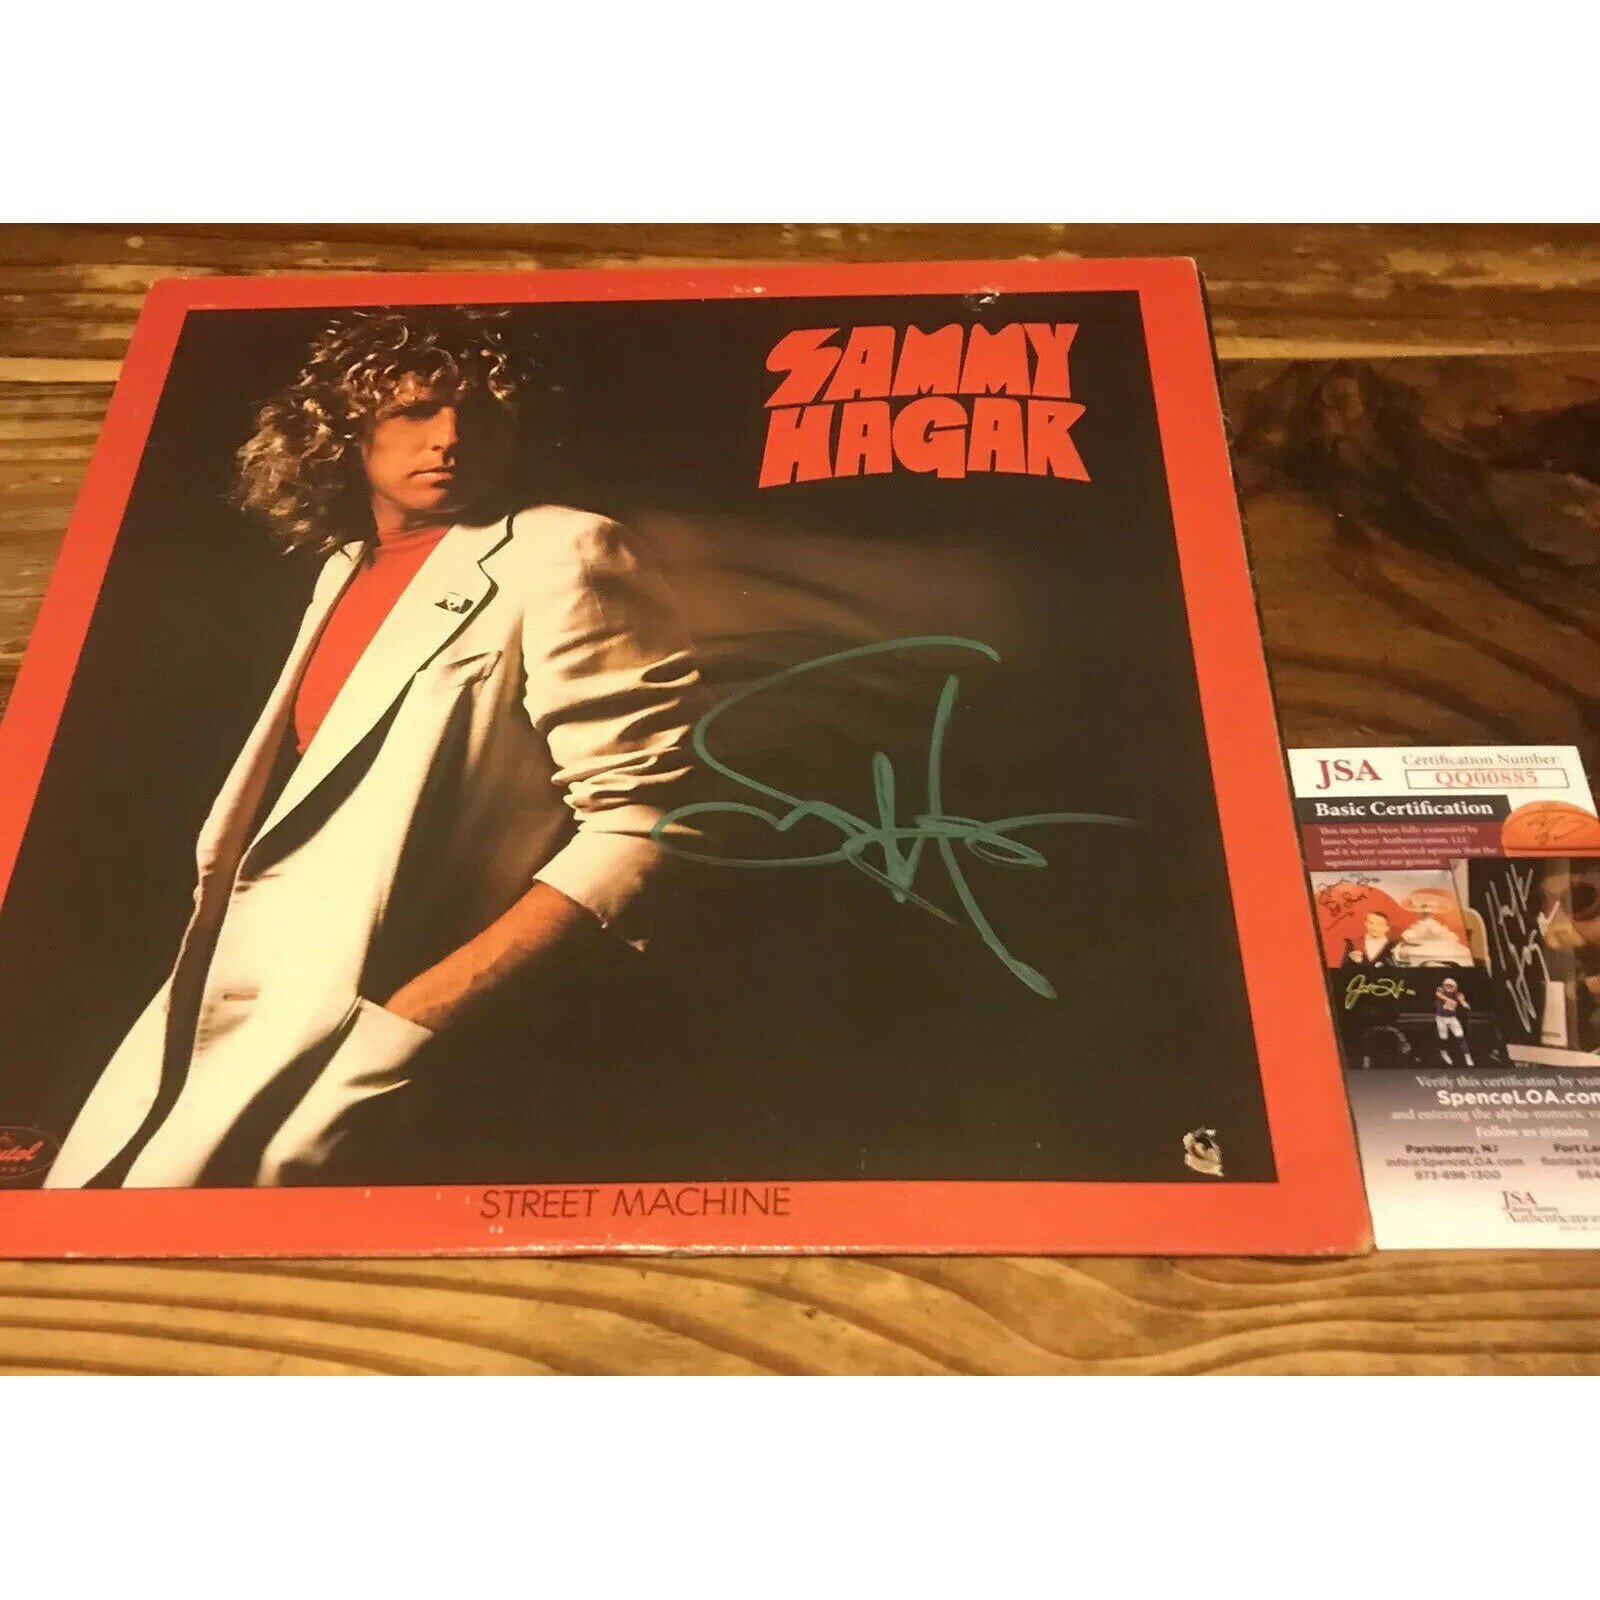 Sammy Hagar Autographed Signed Vinyl Record JSA Certified Red Rocker Van Halen Autographed